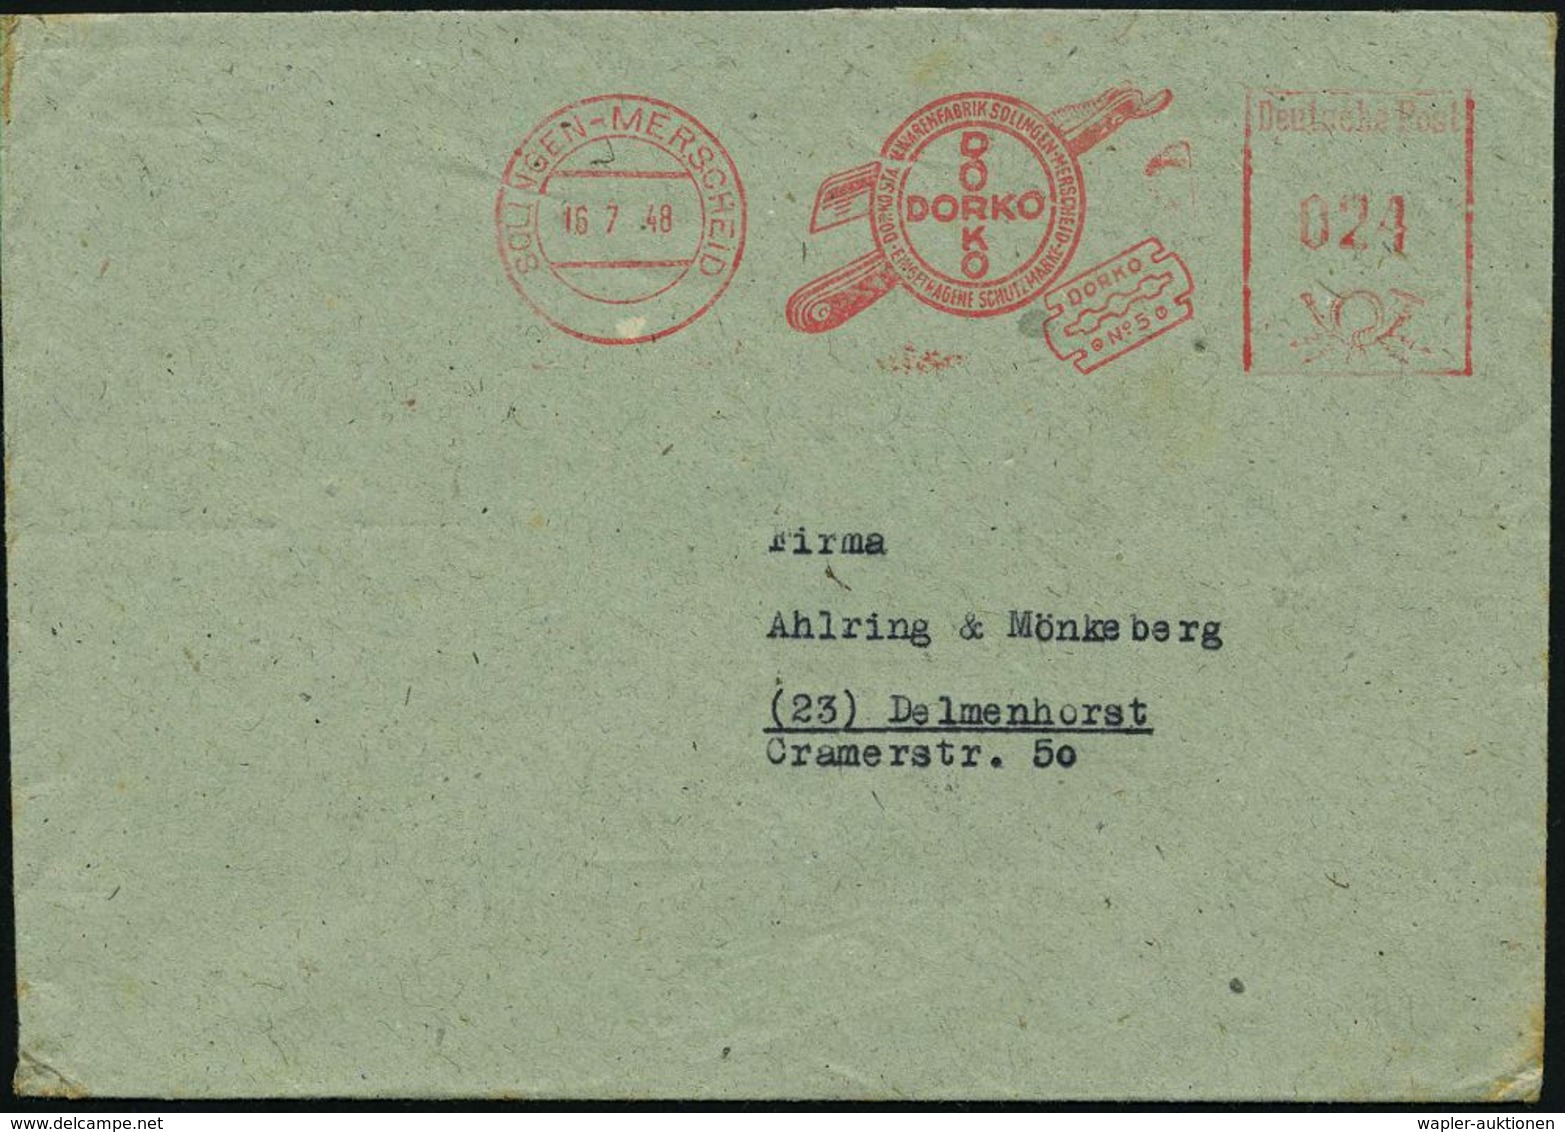 HAAR / BART / RASUR / FRISEUR : SOLINGEN-MERSCHEID/ DORKO STAHLWARENFABRIK.. 1948 (16.7.) AFS = Klapp-Rasiermesse (u. Ra - Pharmazie